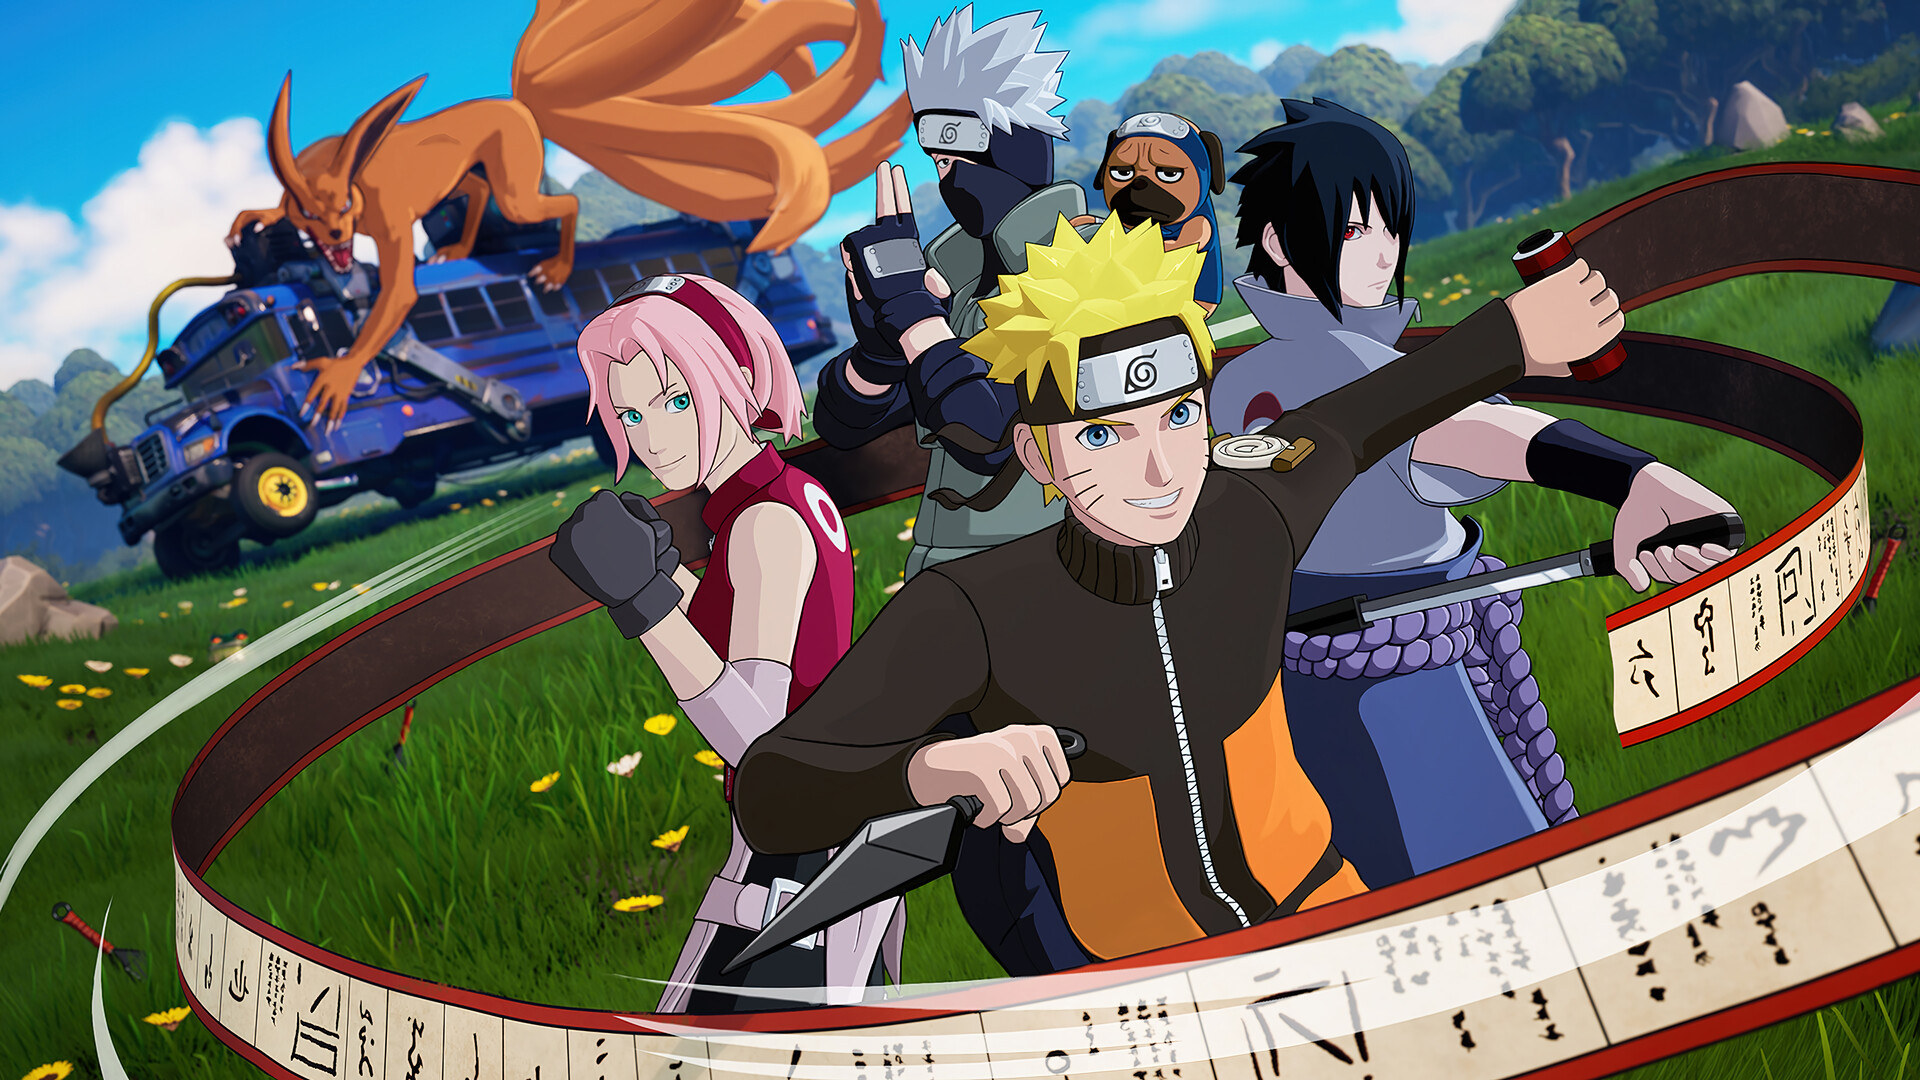 Téléchargez gratuitement l'image Jeux Vidéo, Sasuke Uchiwa, Sakura Haruno, Naruto Uzumaki, Kakashi Hatake, Kurama (Naruto), Fortnite sur le bureau de votre PC